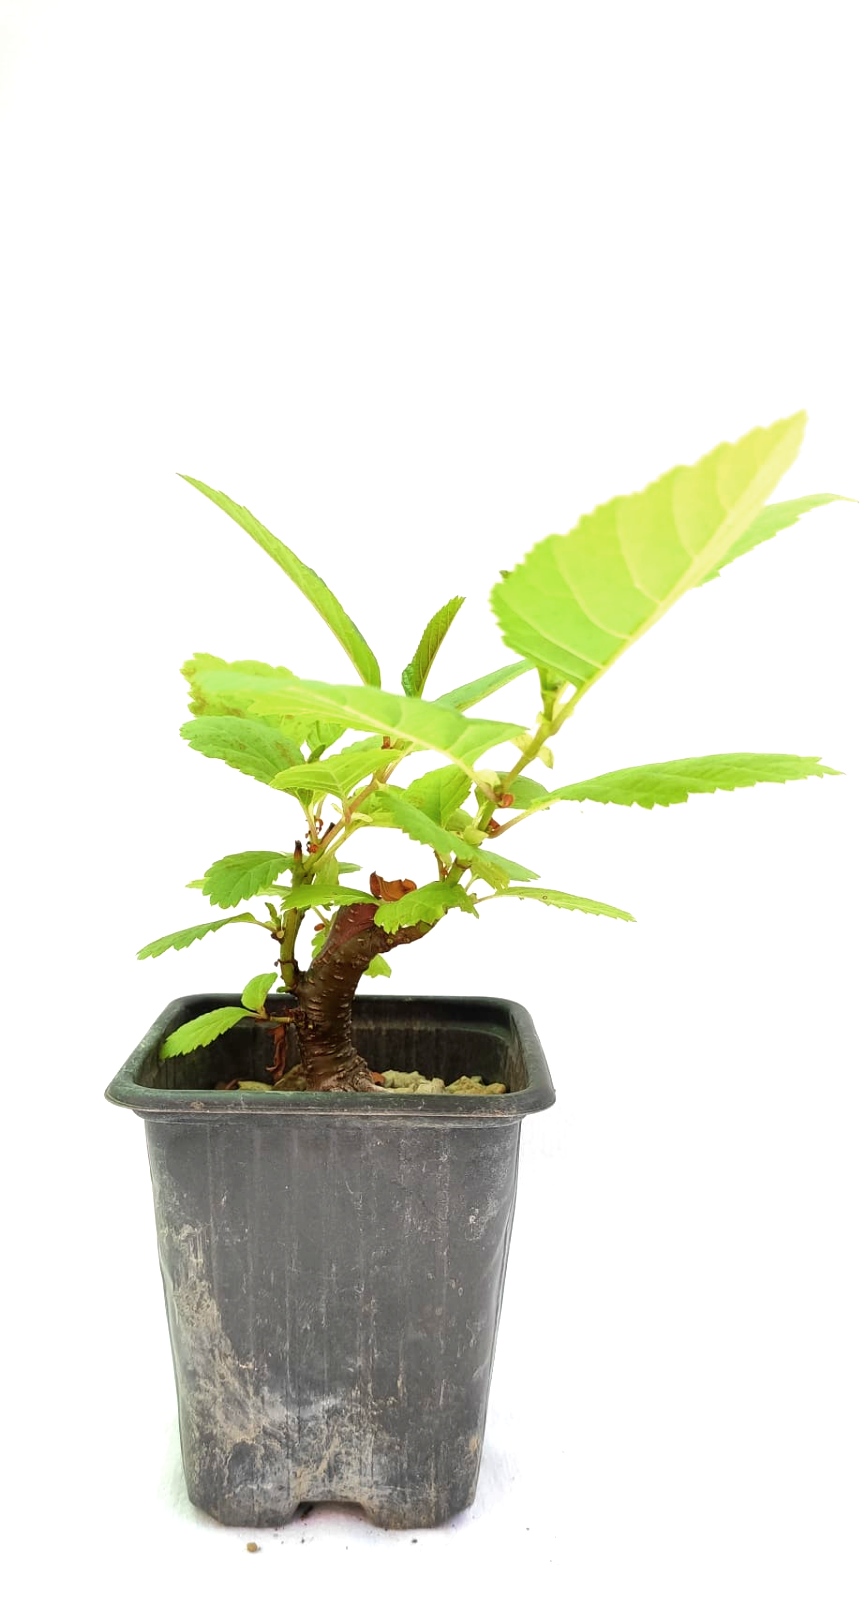 Planta de Alnus glutinosa - Aliso común